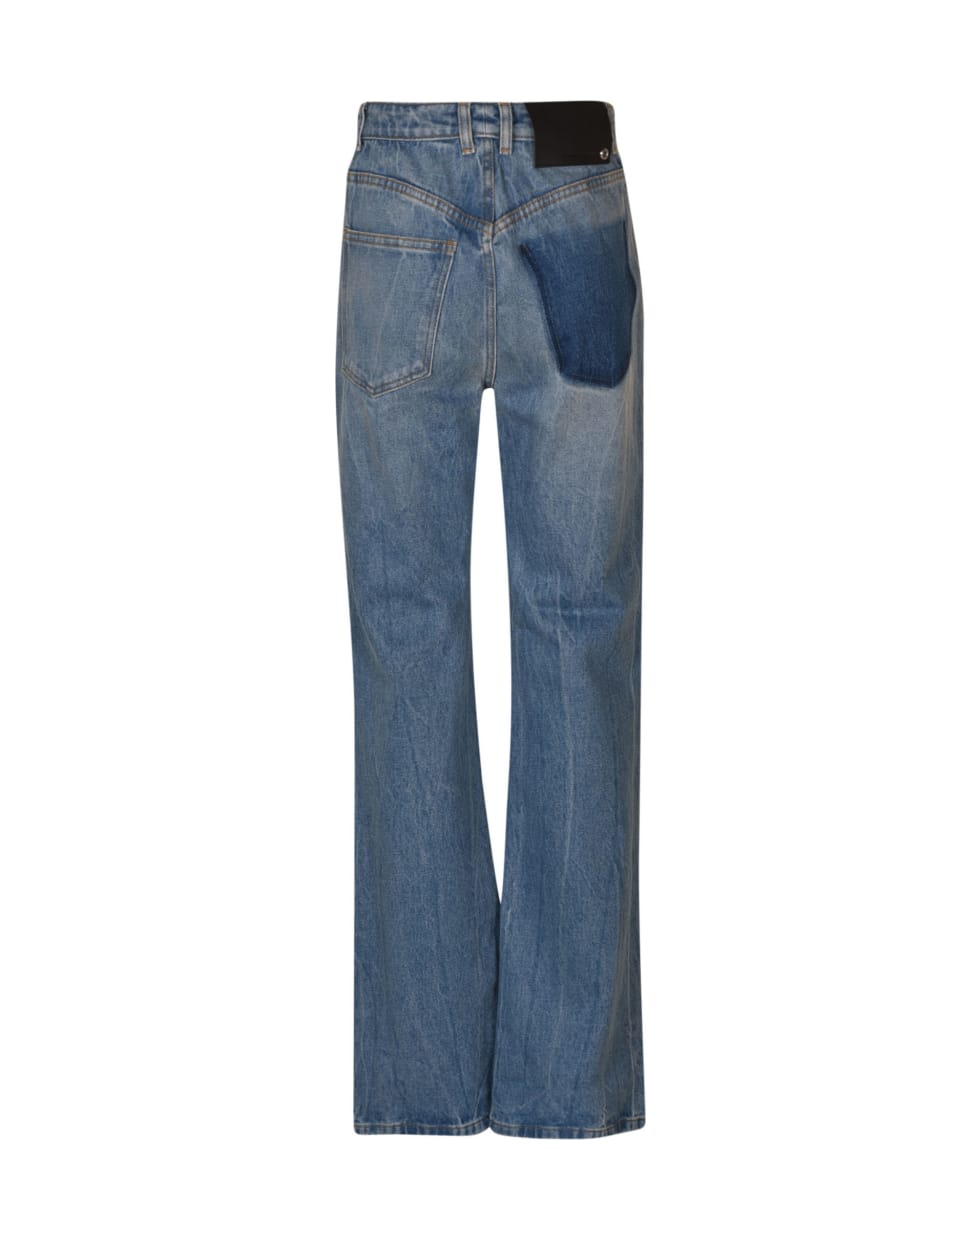 Paco Rabanne Classic 5 Pockets Jeans - Denim